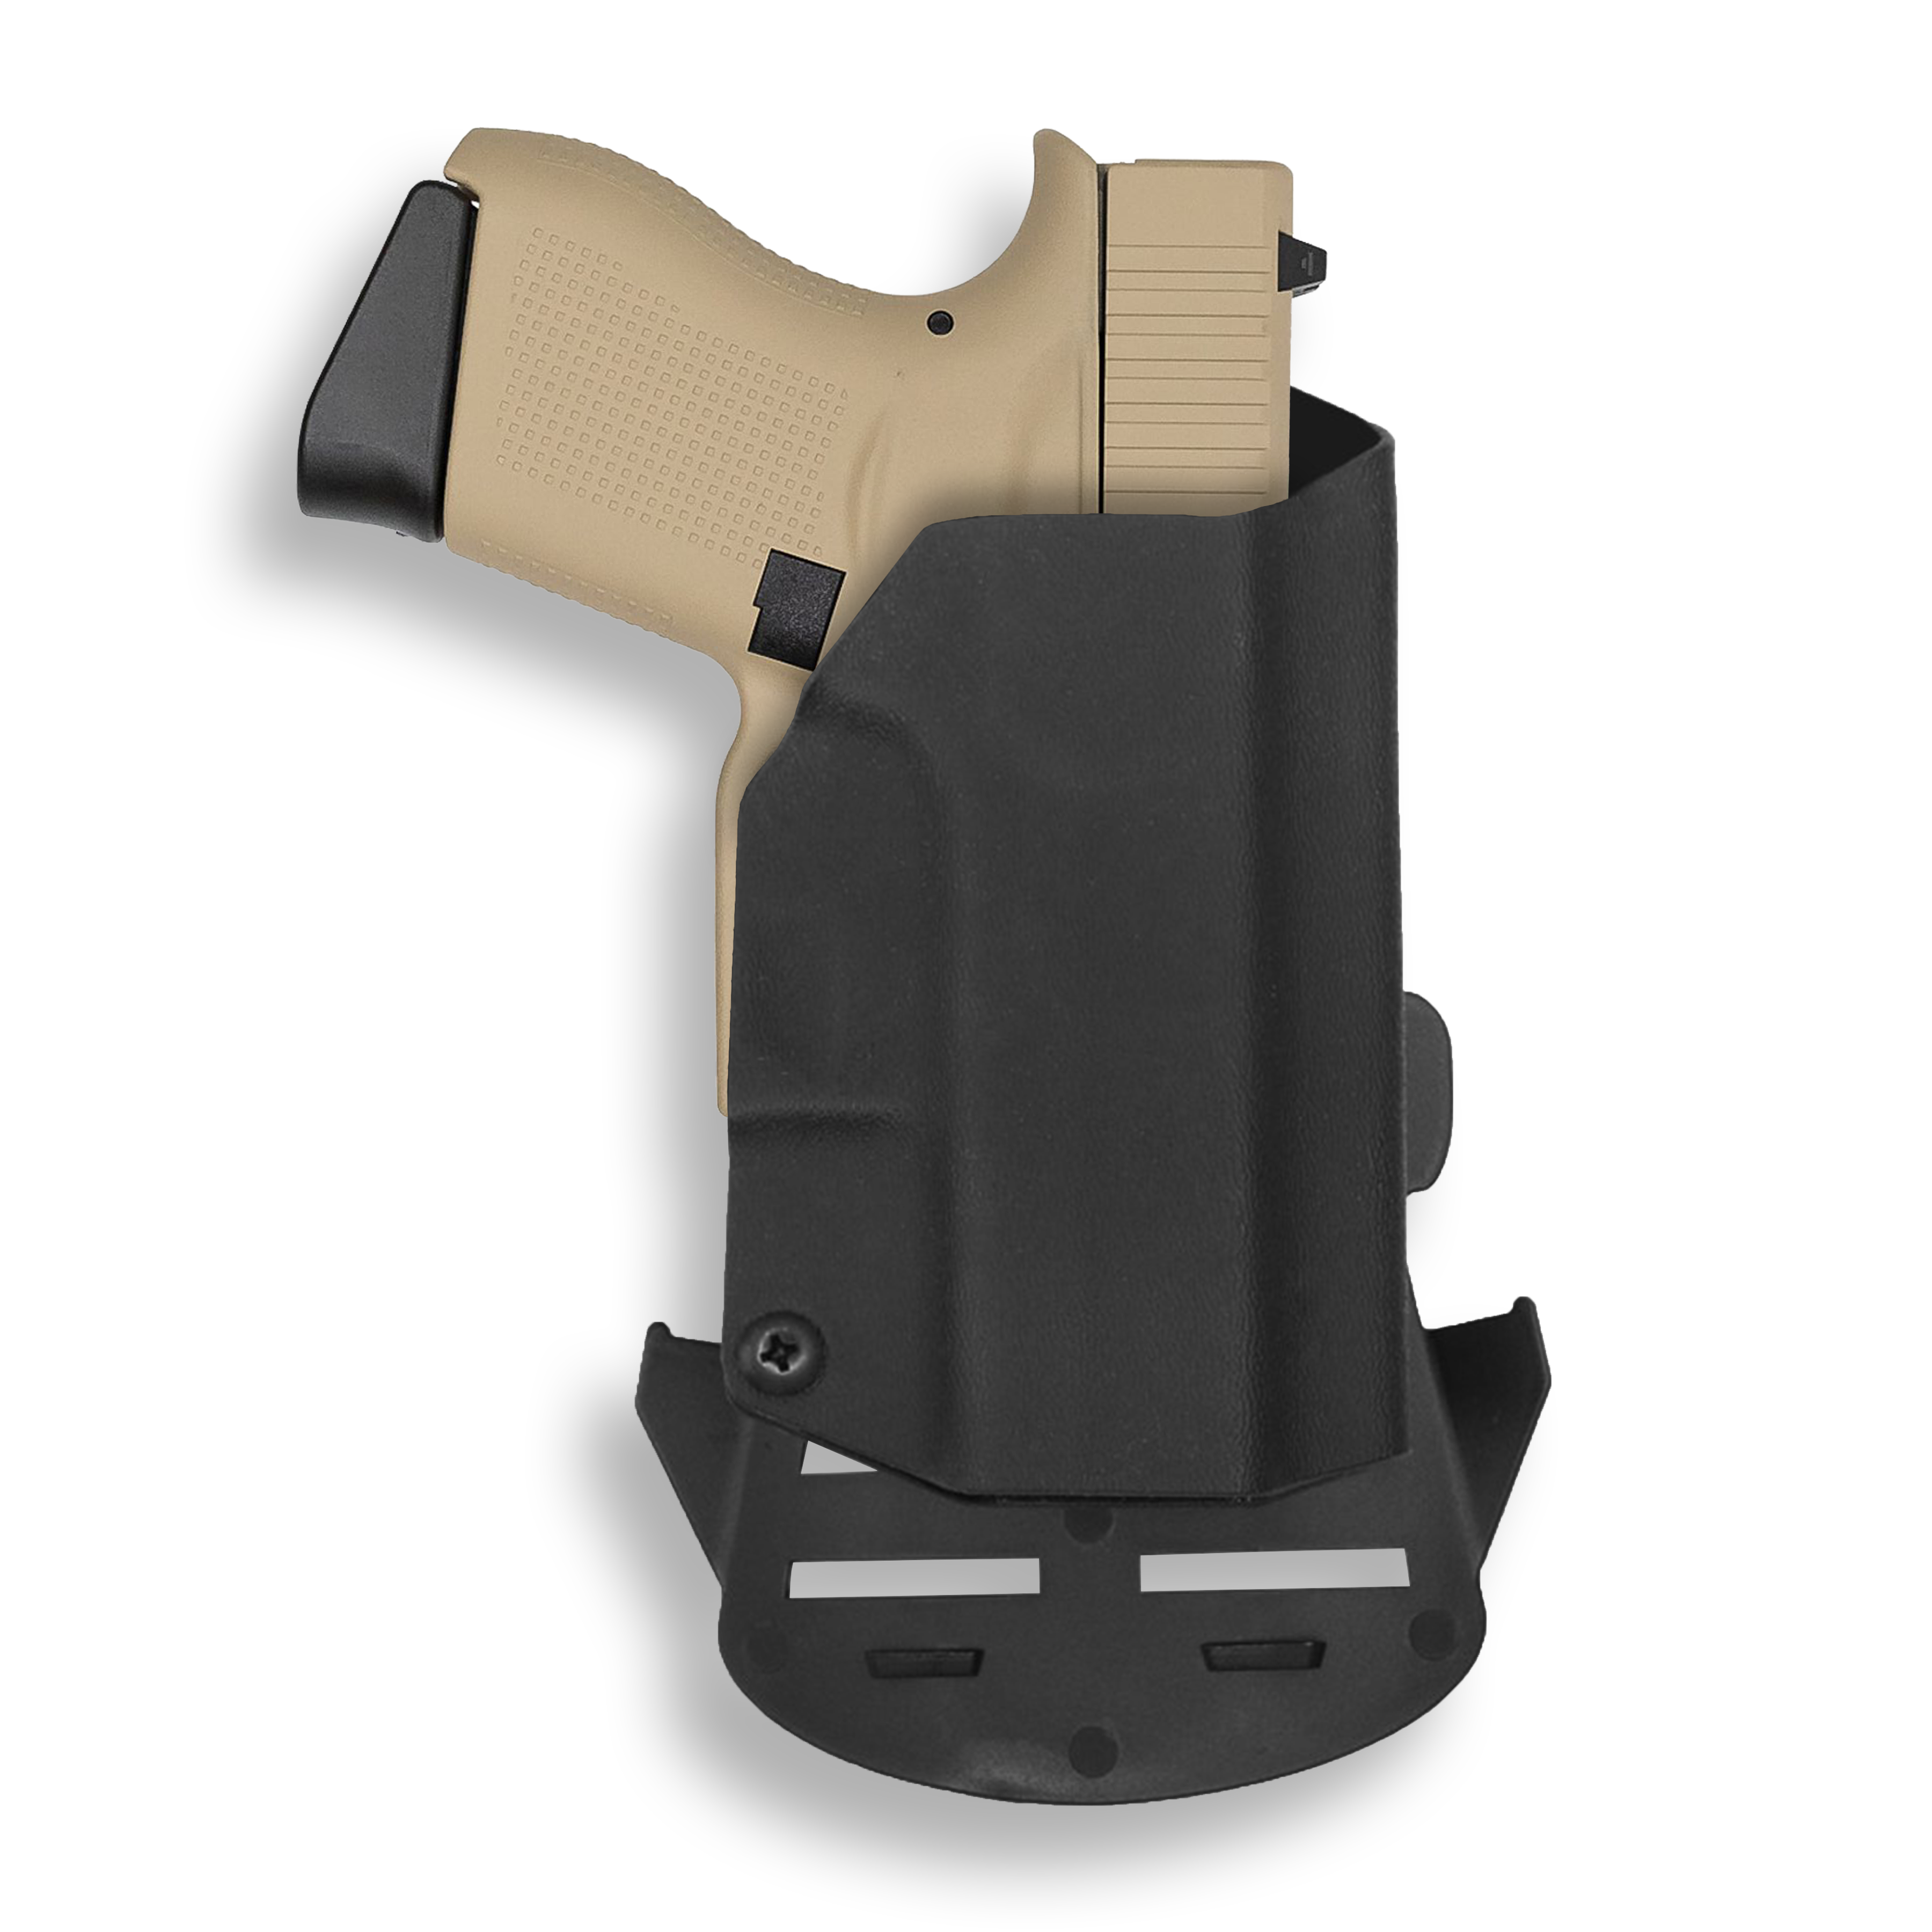 Glock 42 Holster - Made in U.S.A. - Lifetime Warranty